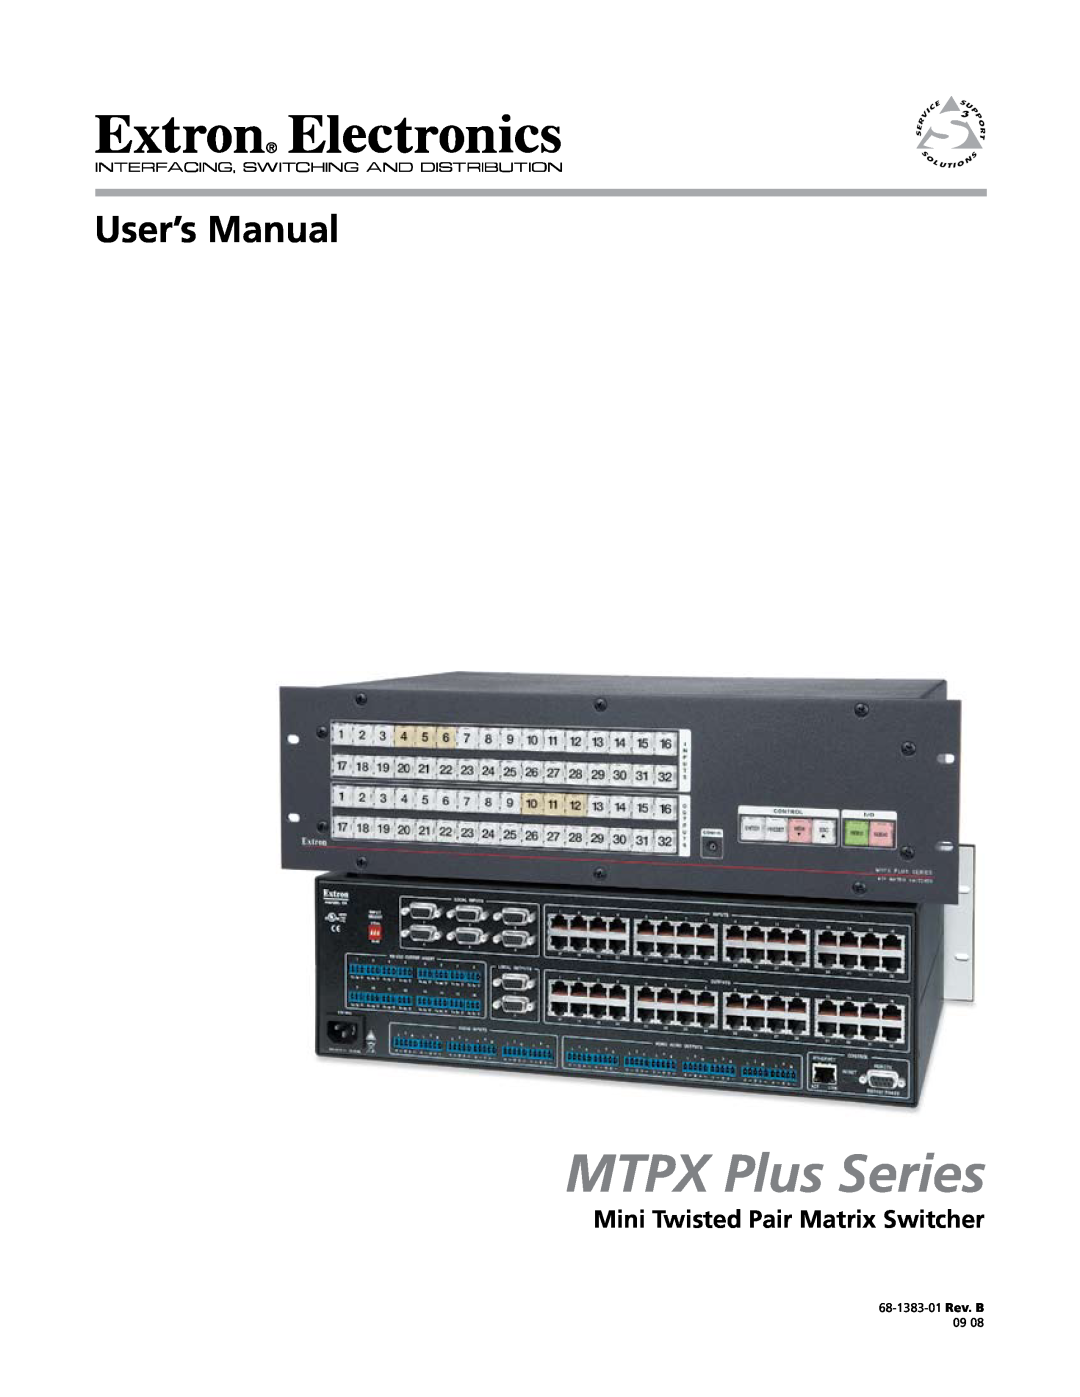 Extron electronic MTPX Plus Series manual Mini Twisted Pair Matrix Switcher, 68-1383-01 Rev. B 